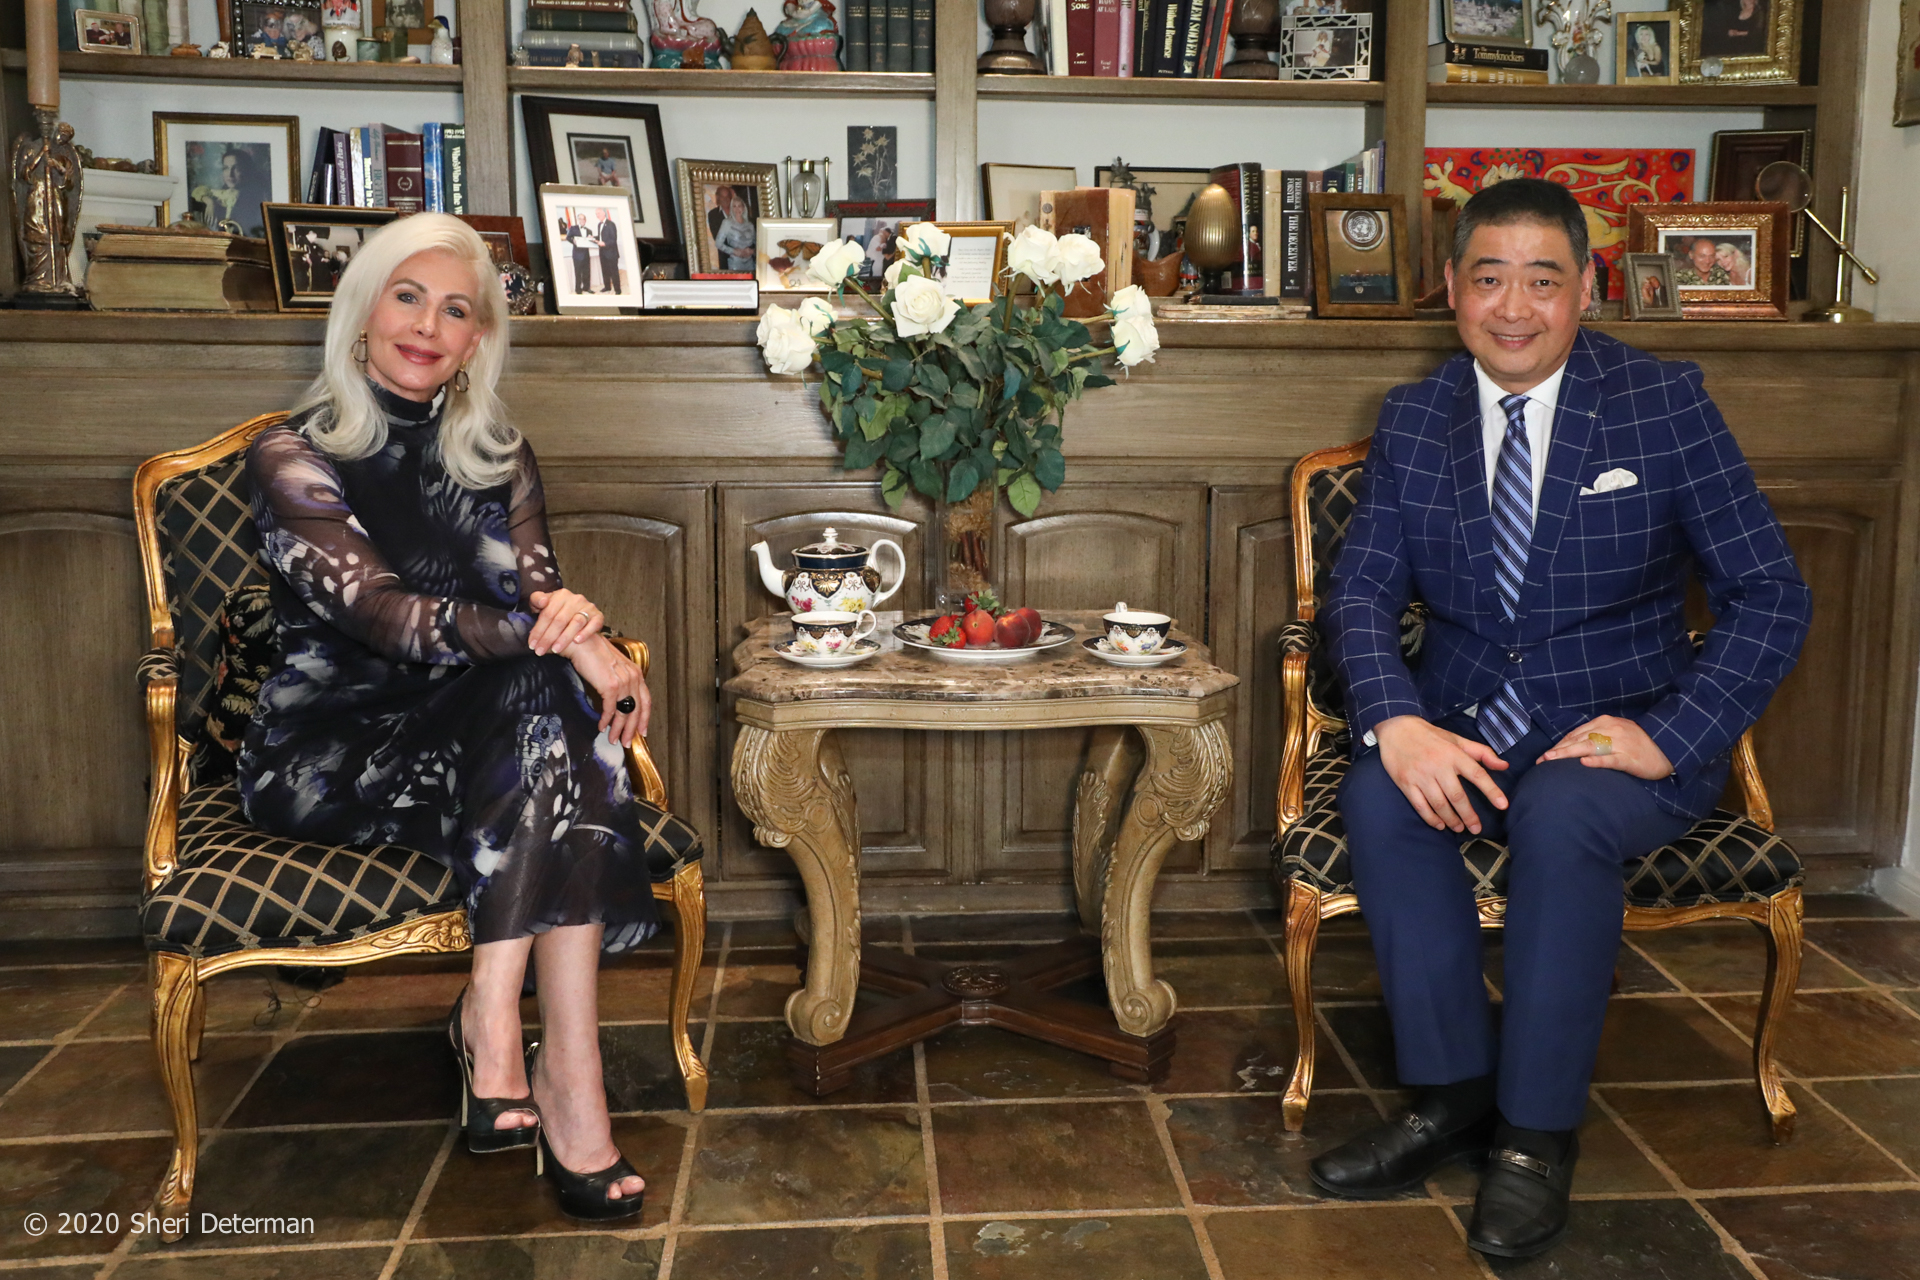 Joey Zhou with Princess Karen Cantrell